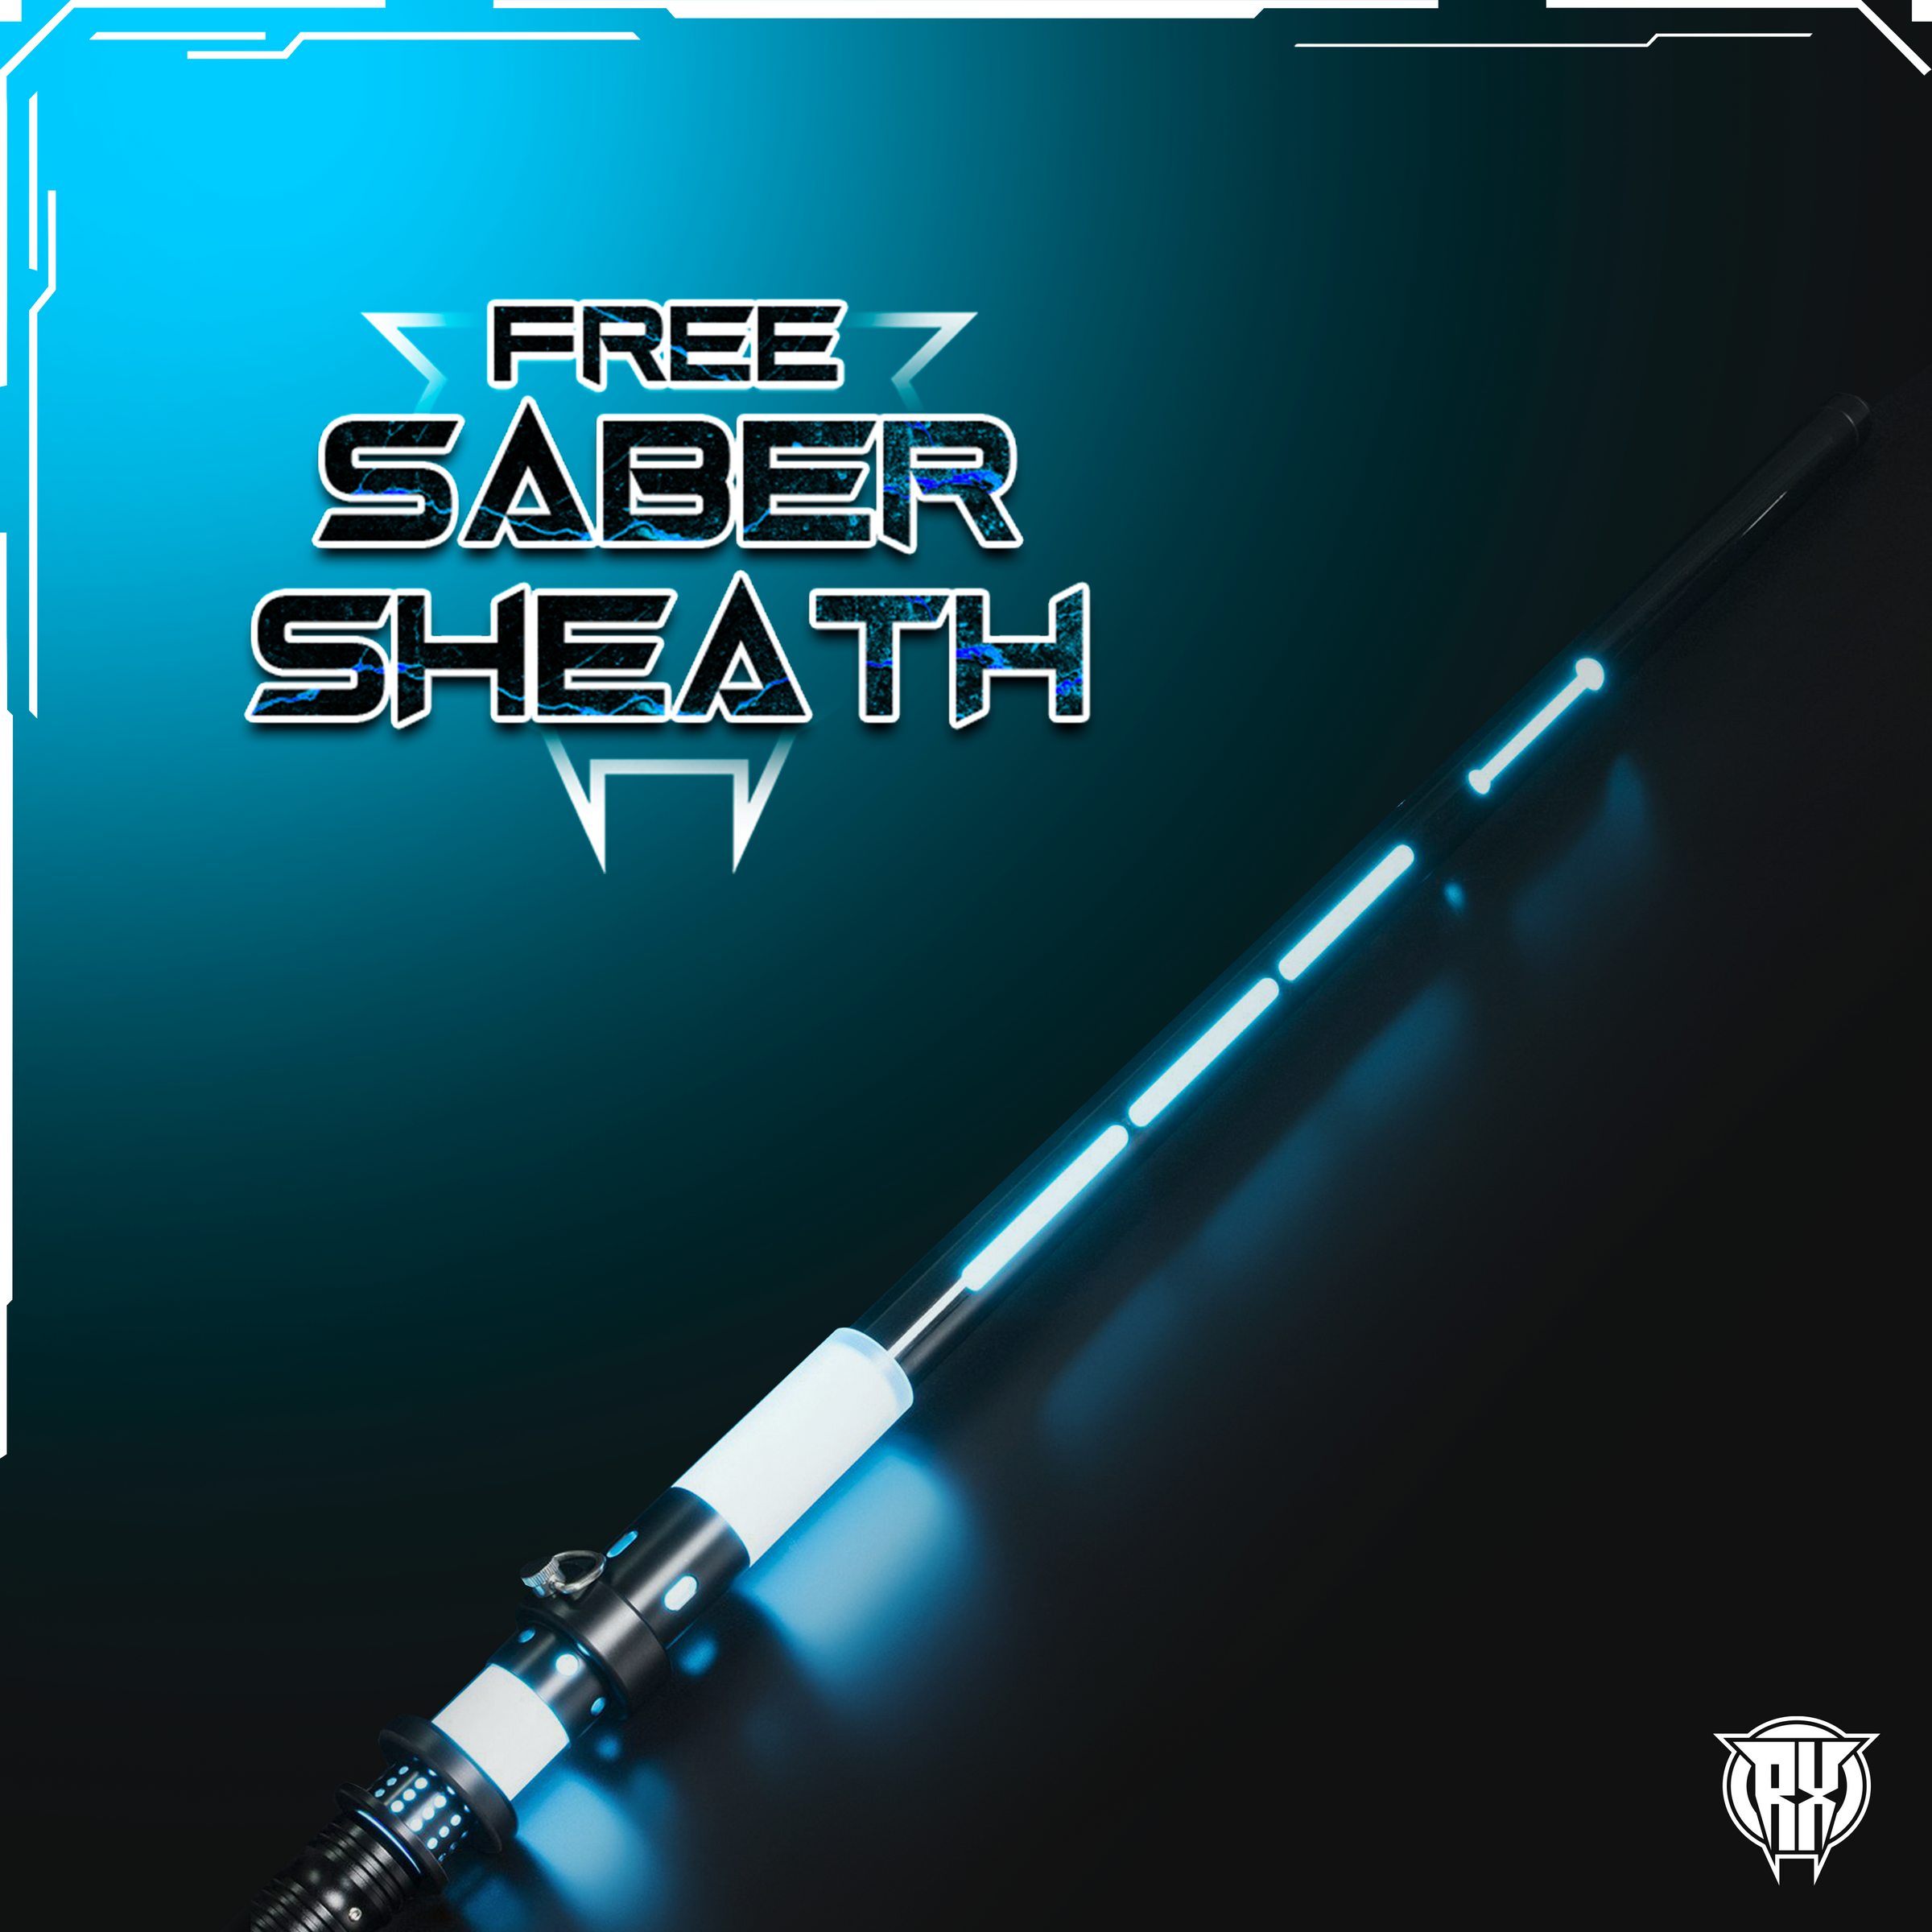 Free Saber Sheath Offer